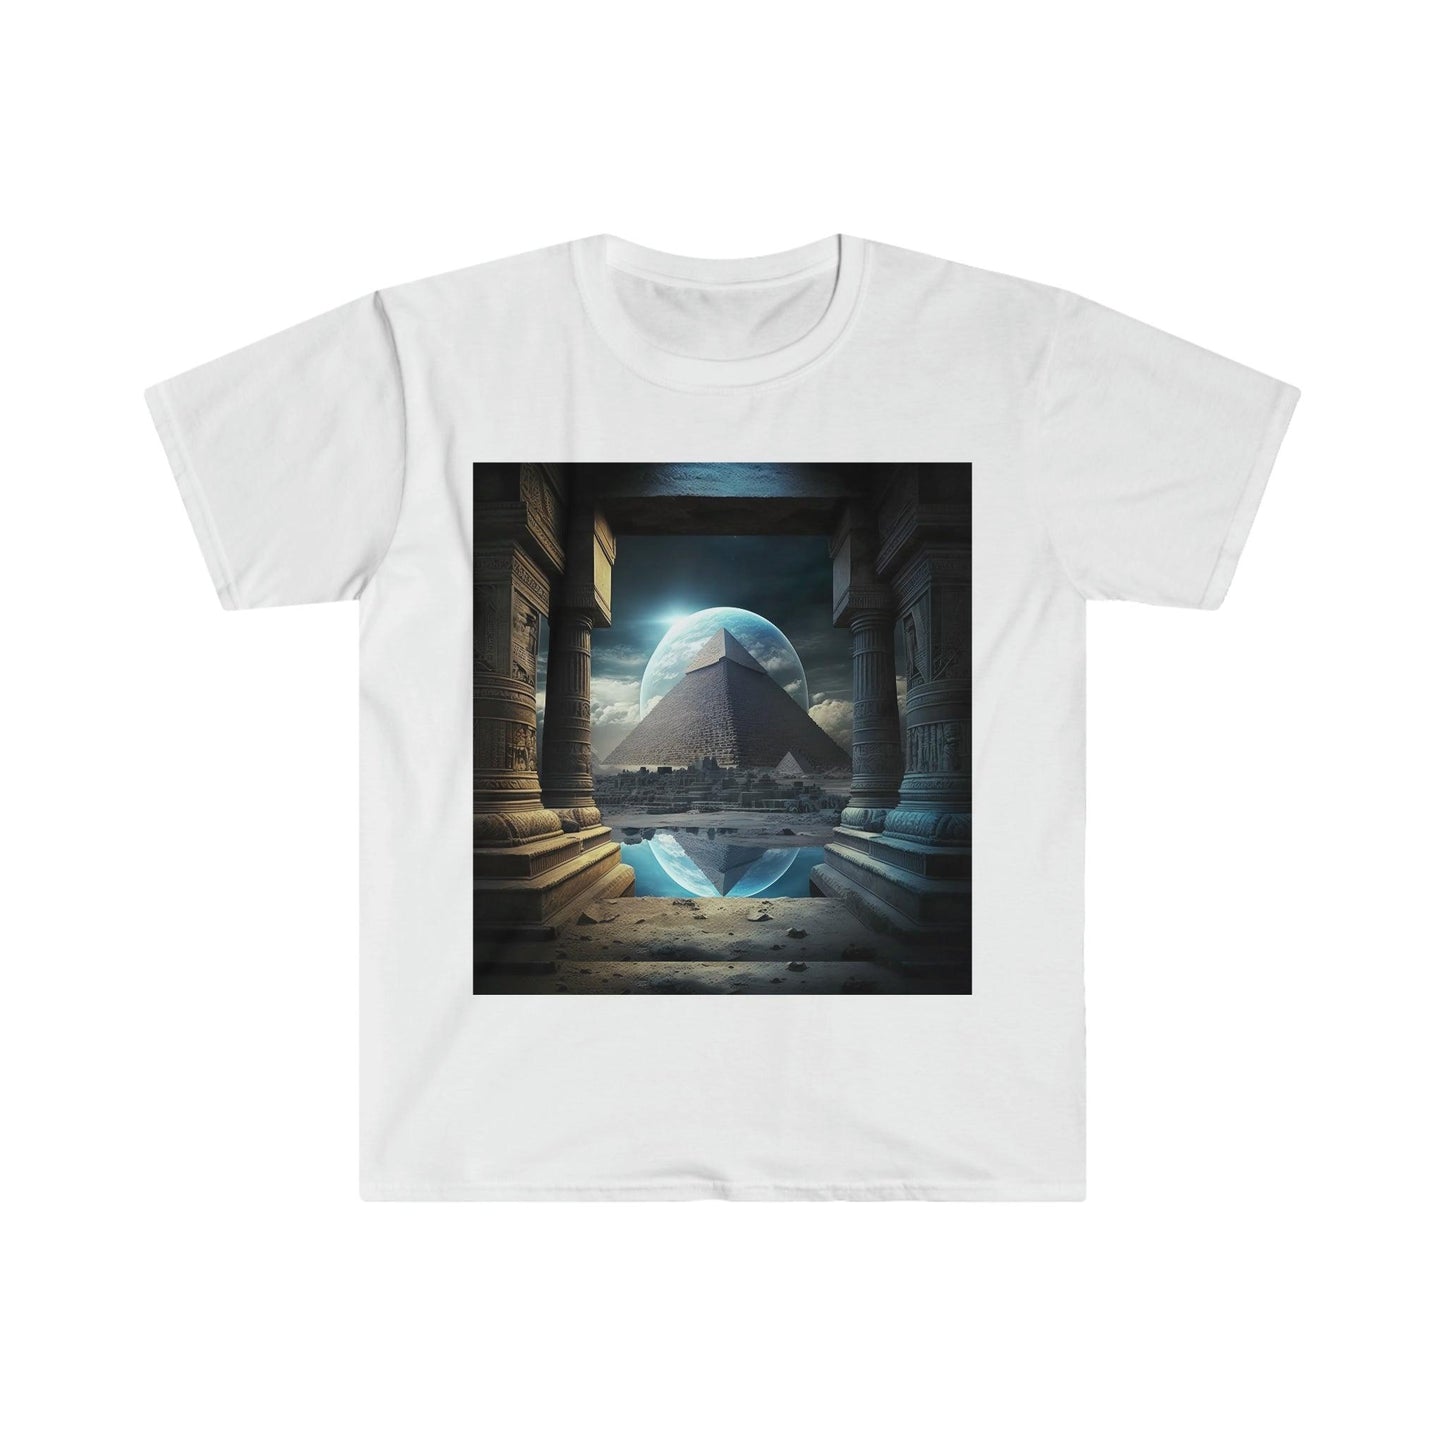 Mystic Eclipse: Egyptian Pyramid AI Art T-shirt -Men's and Women's Unisex Softstyle Shirt - Festival Urban Street Wear v2.0 - Alchemystics.org